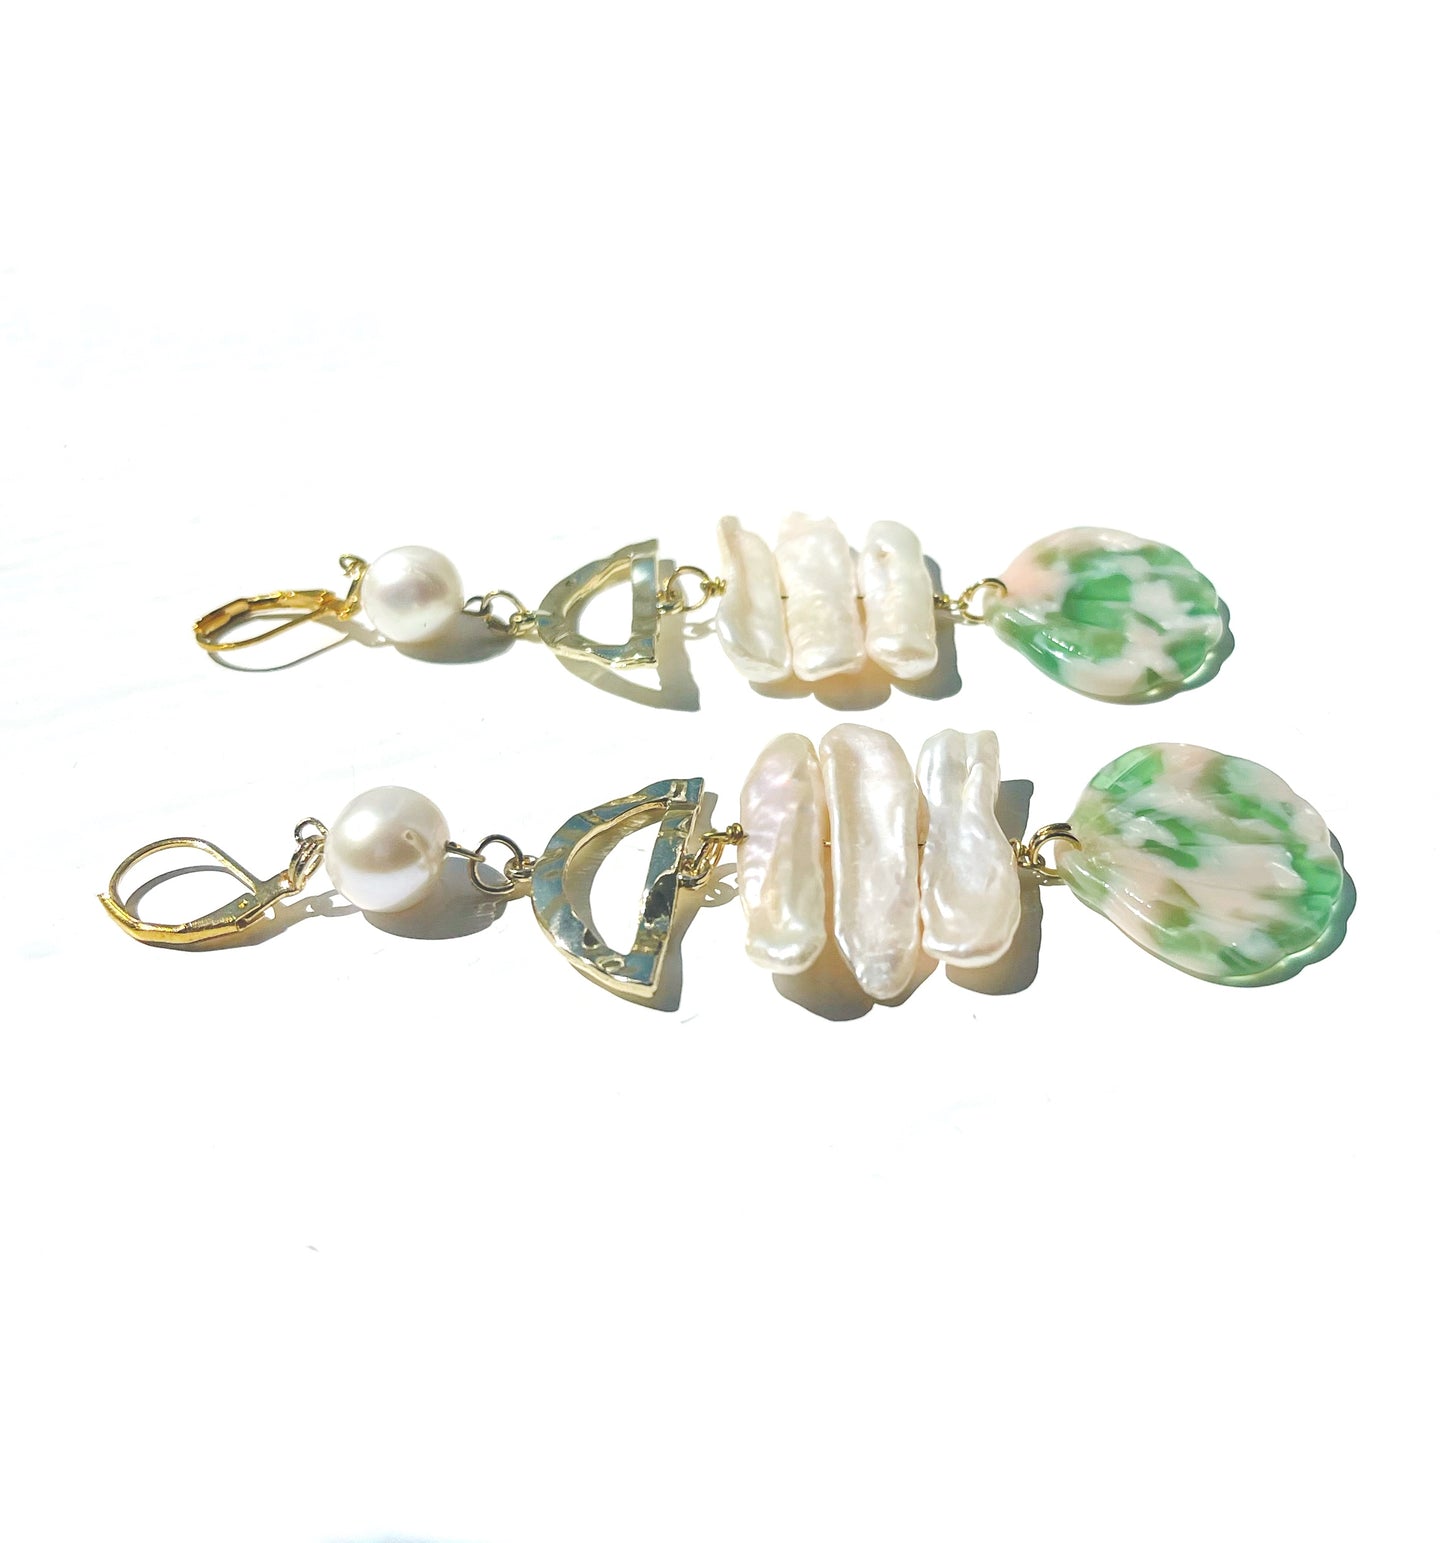 Statement summer earrings, colourful seashell drop earrings, white freshwater pearl boho dangle earrings, vacation accessory jewelry